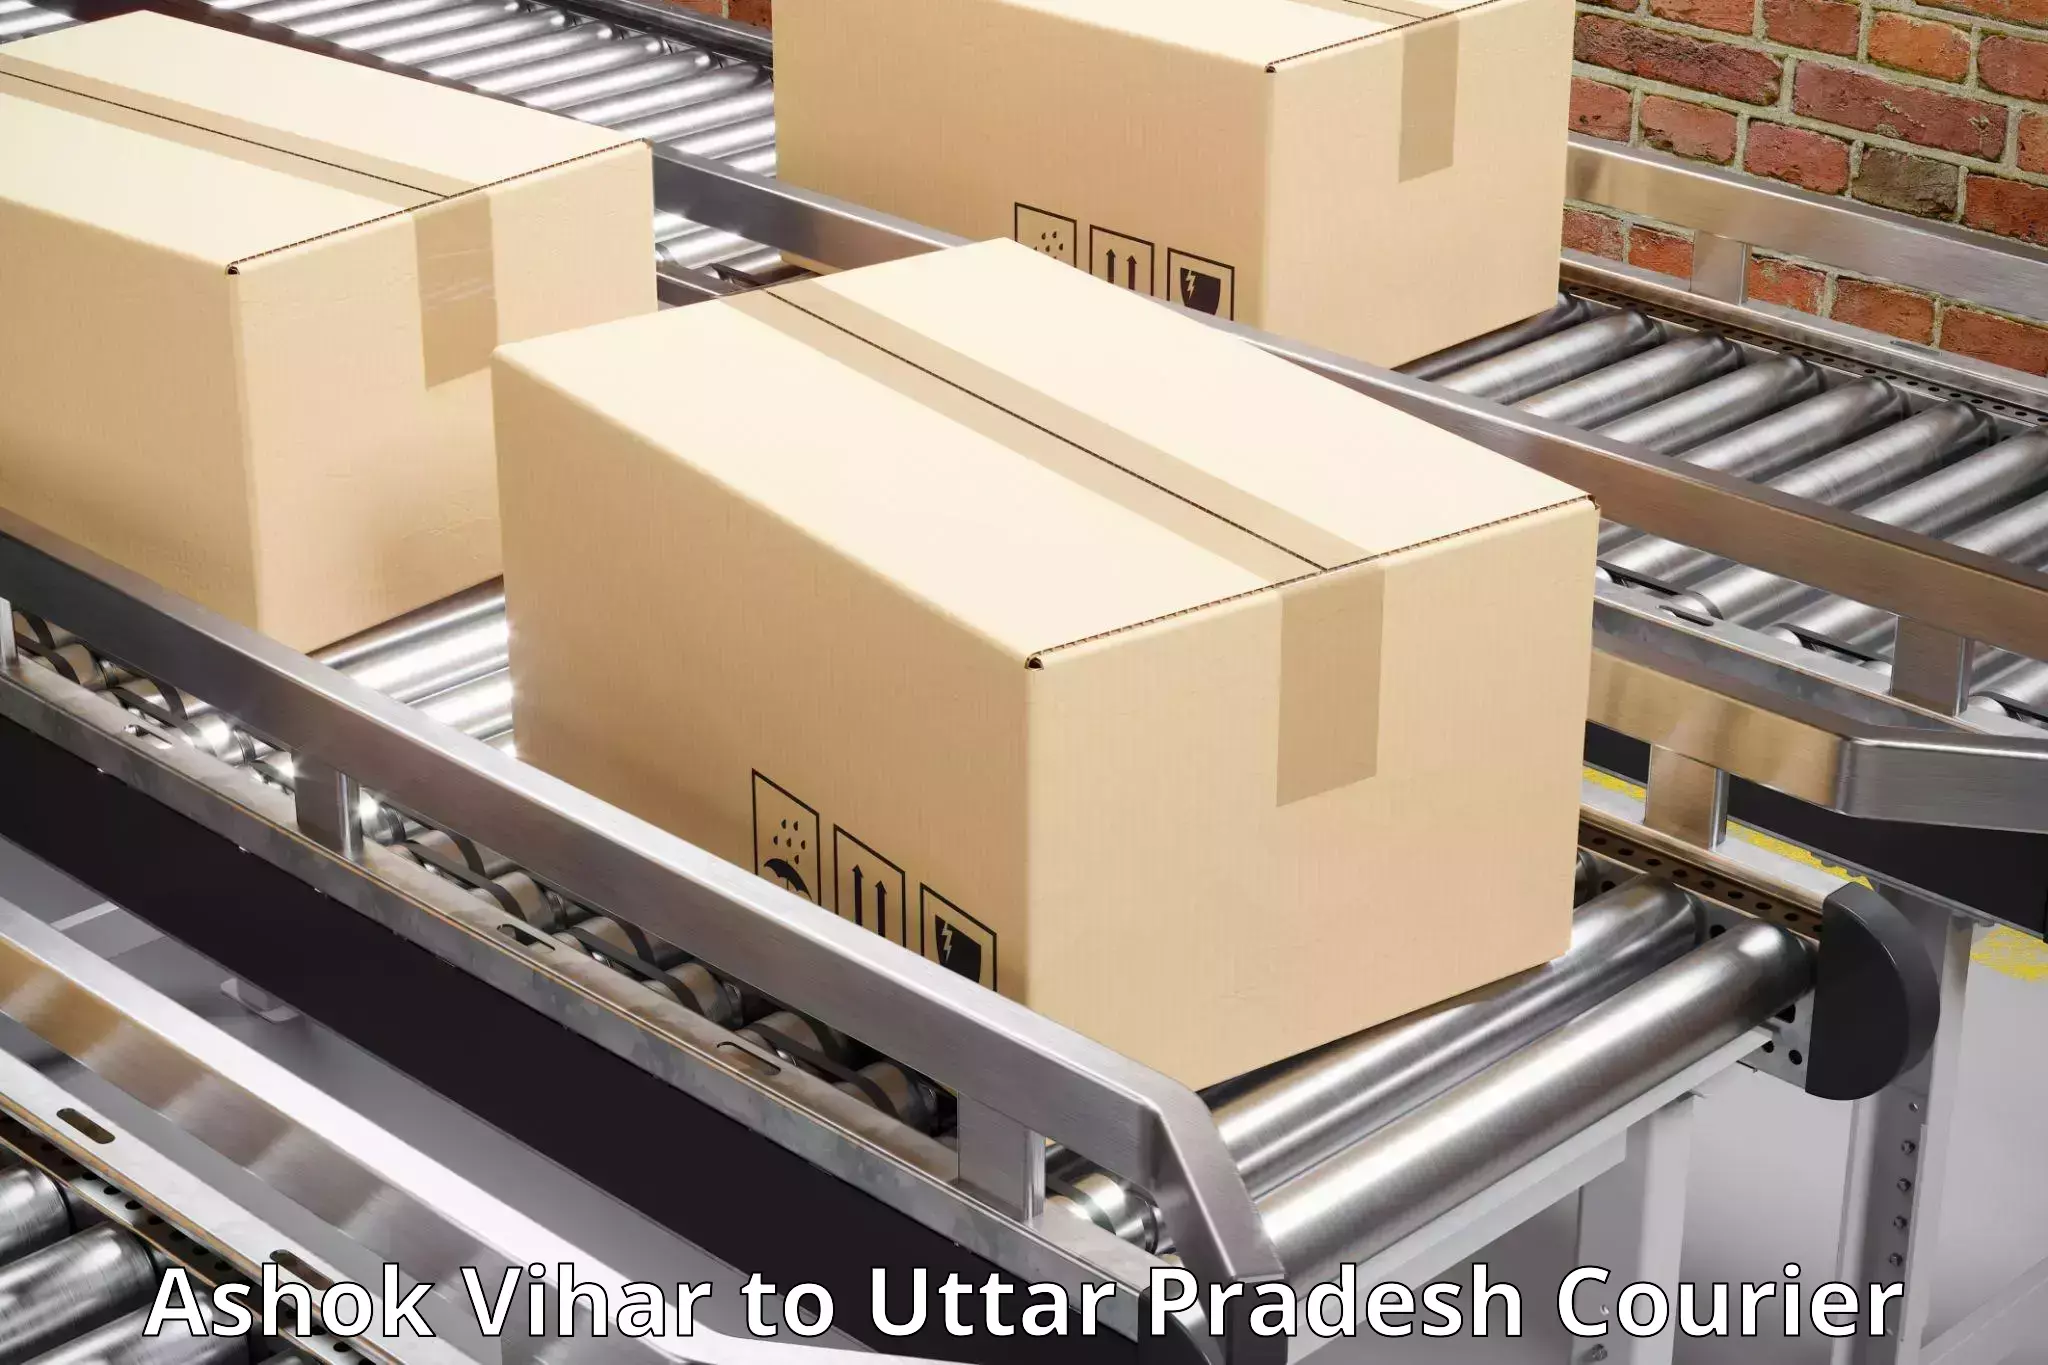 Same-day delivery solutions Ashok Vihar to Chitrakoot